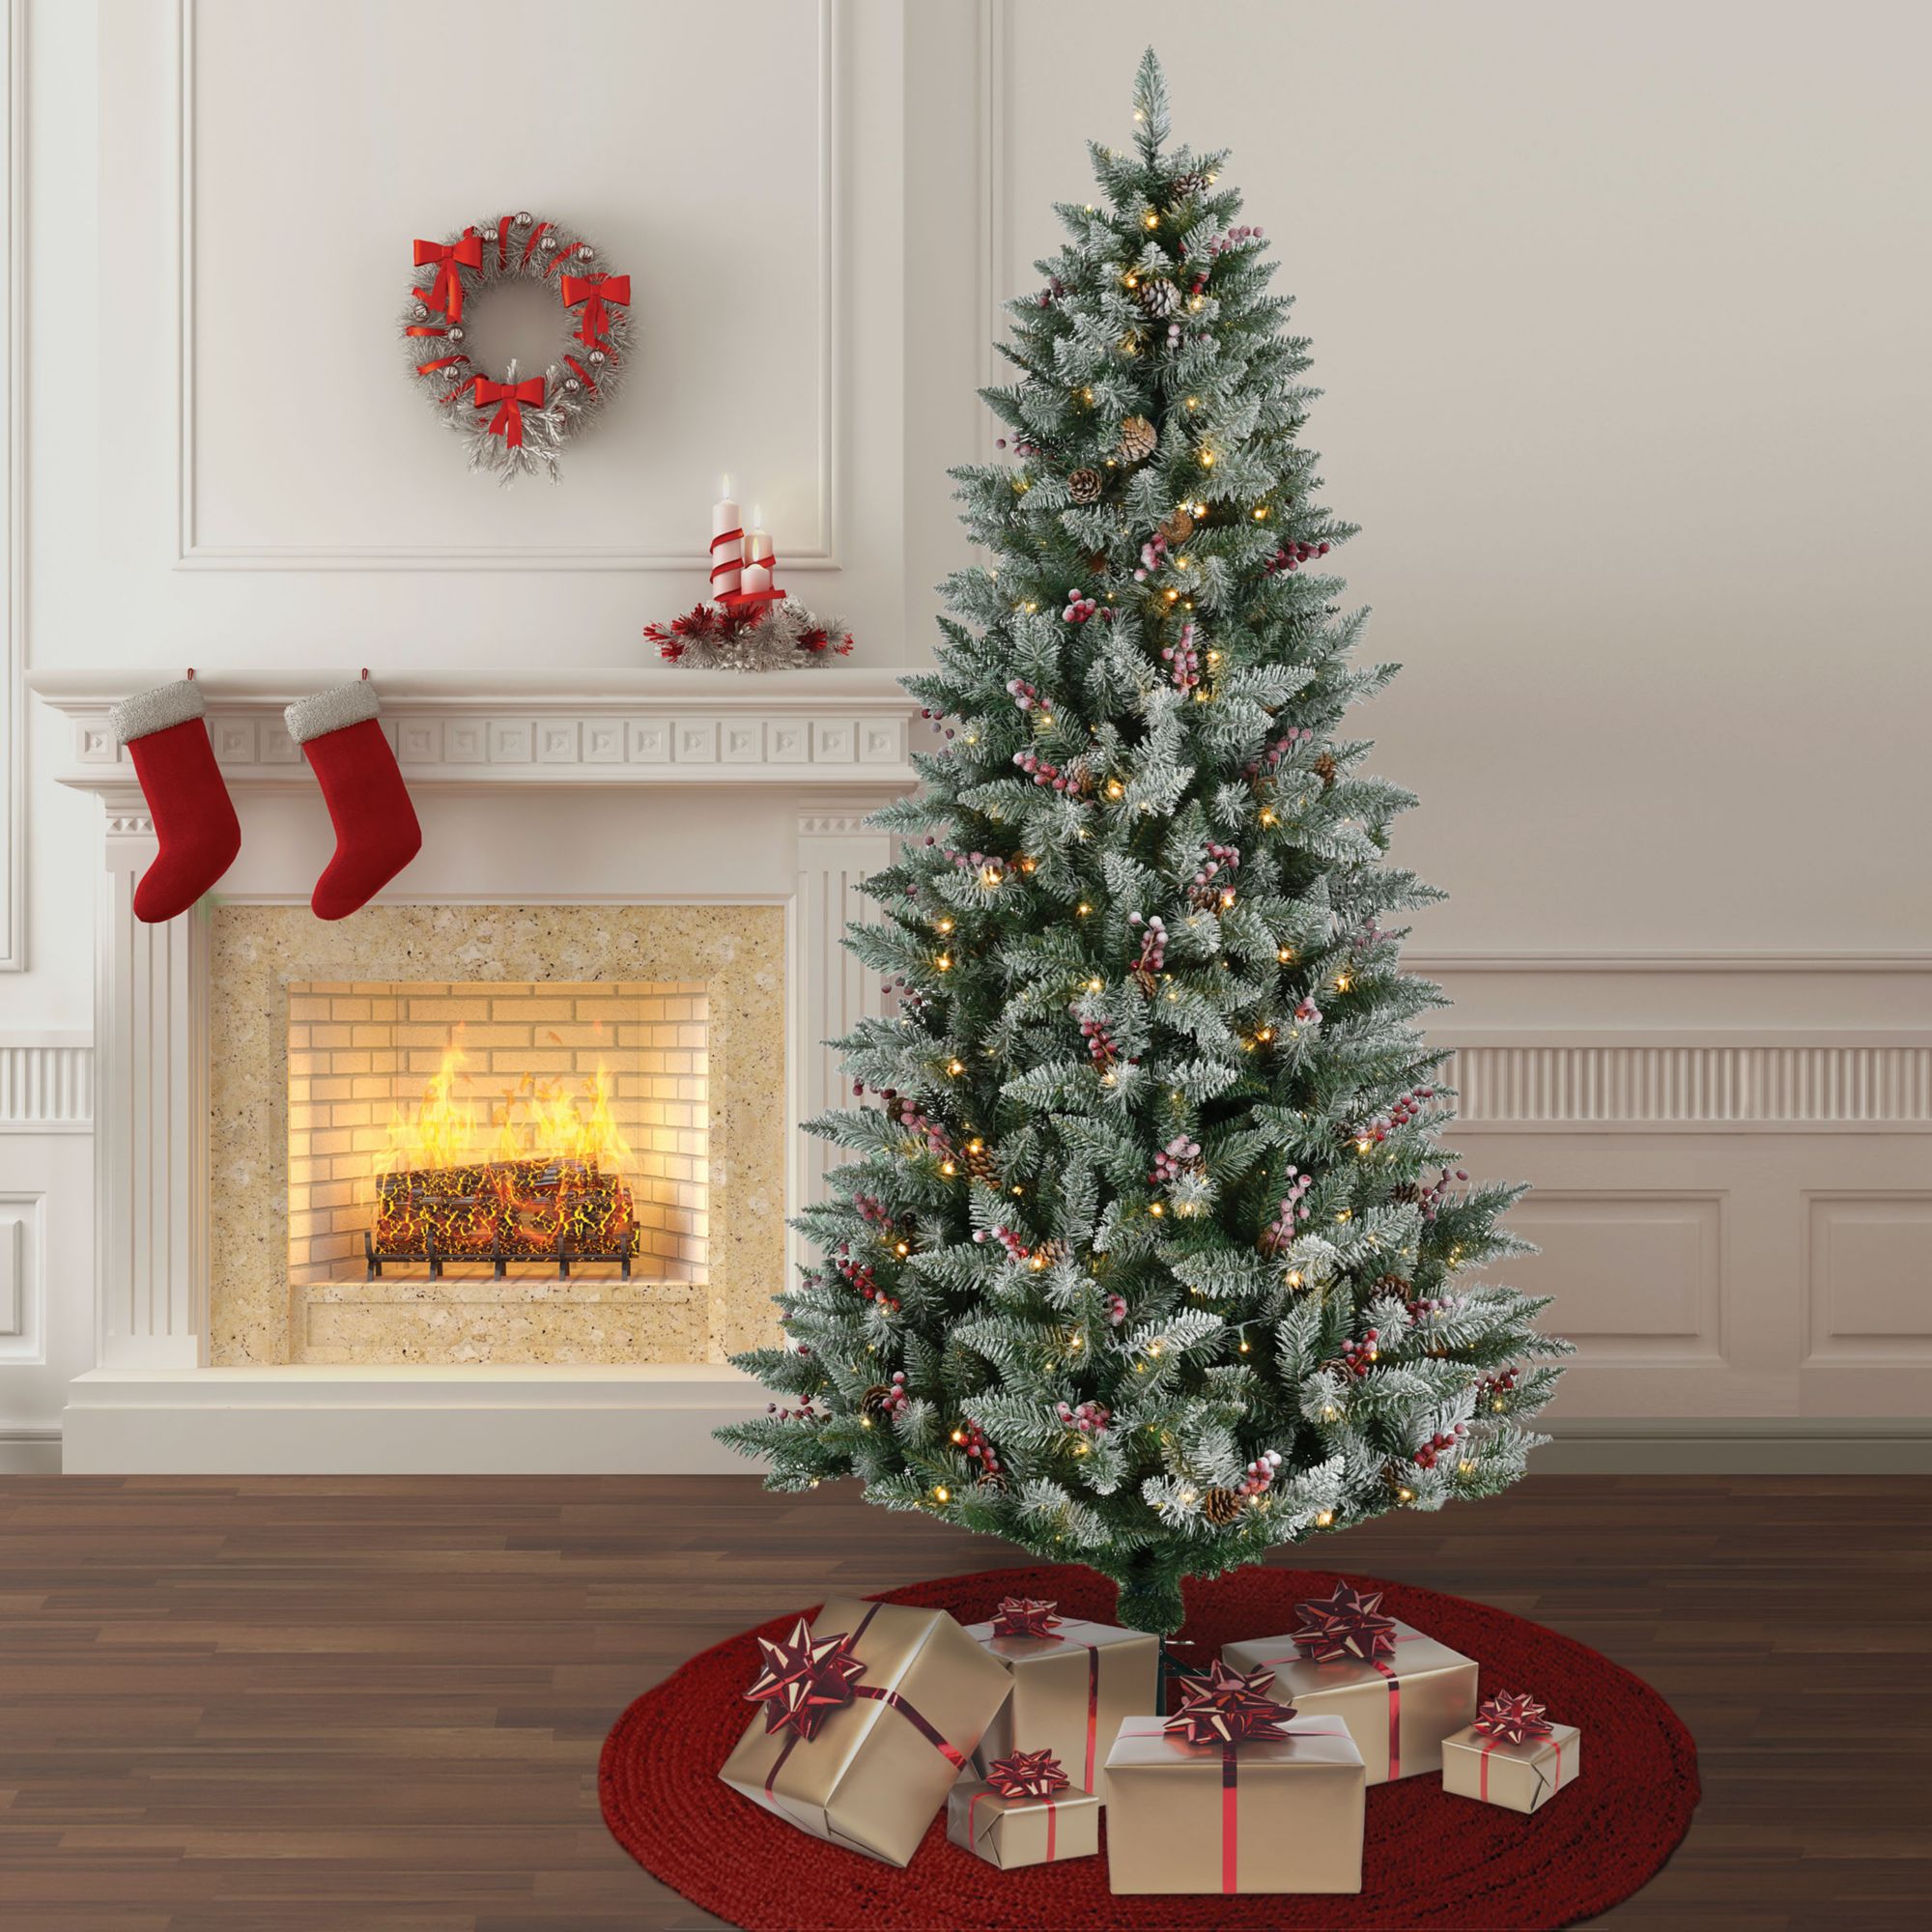 BLACK & DECKER CHRISTMAS TREE SMART STAND 10 SECOND TREE SETUP NEW